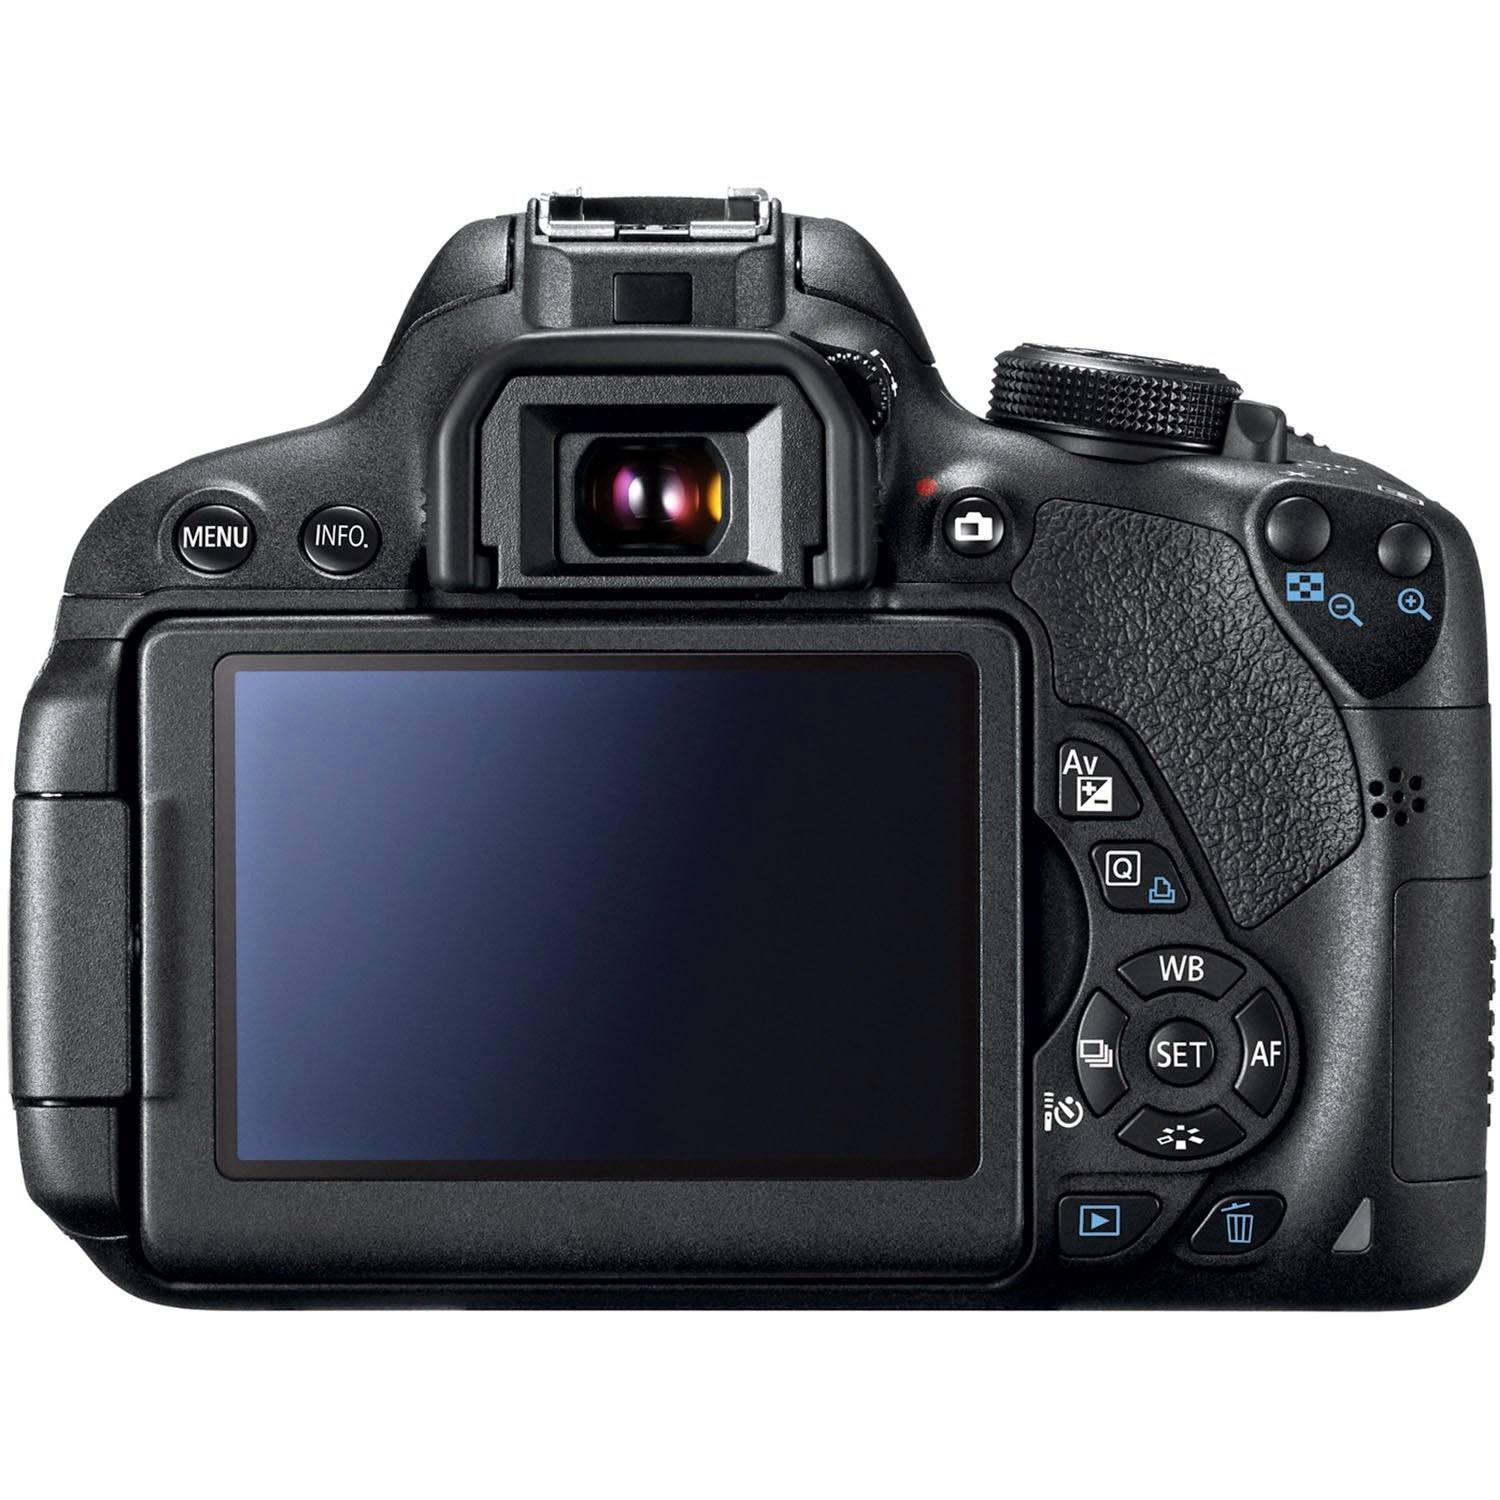 Canon EOS Rebel T5i Digital SLR Camera, rear view